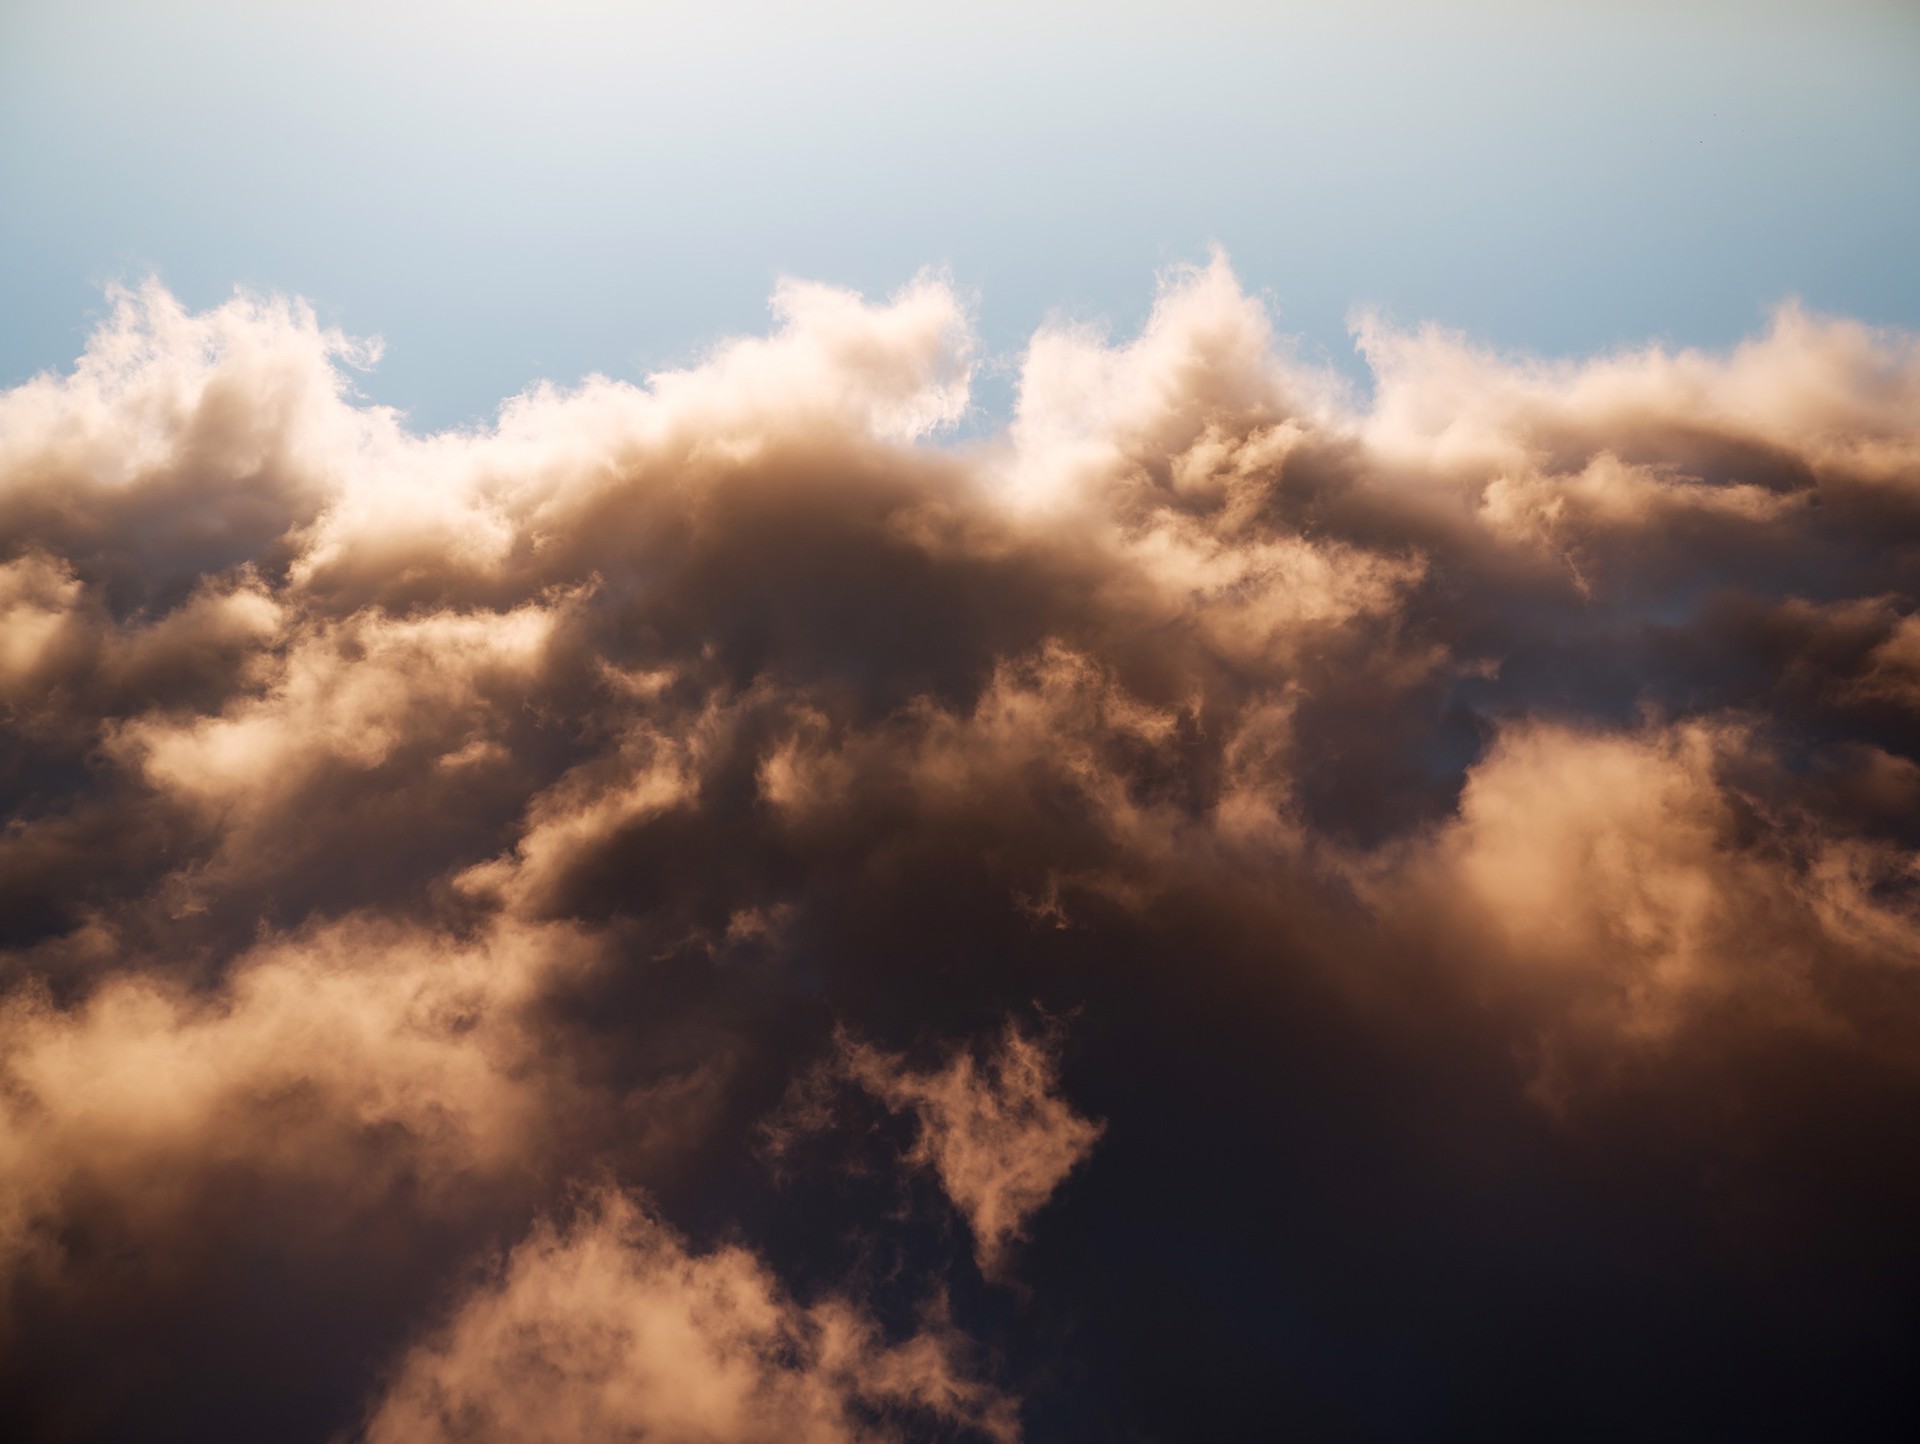 November Clouds #1 by Peter McLennan